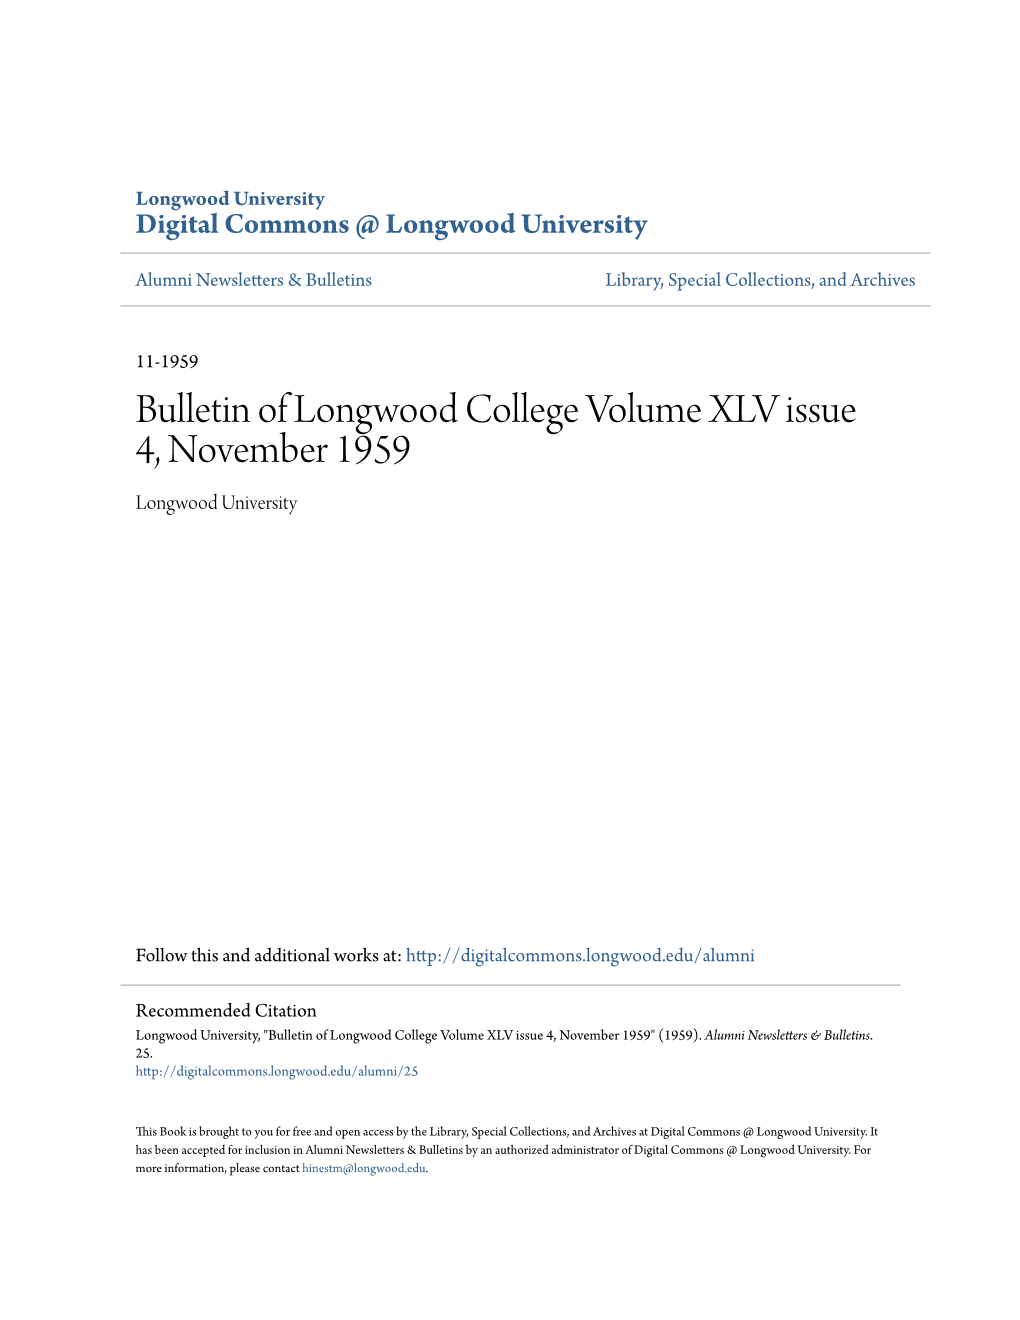 Bulletin of Longwood College Volume XLV Issue 4, November 1959 Longwood University